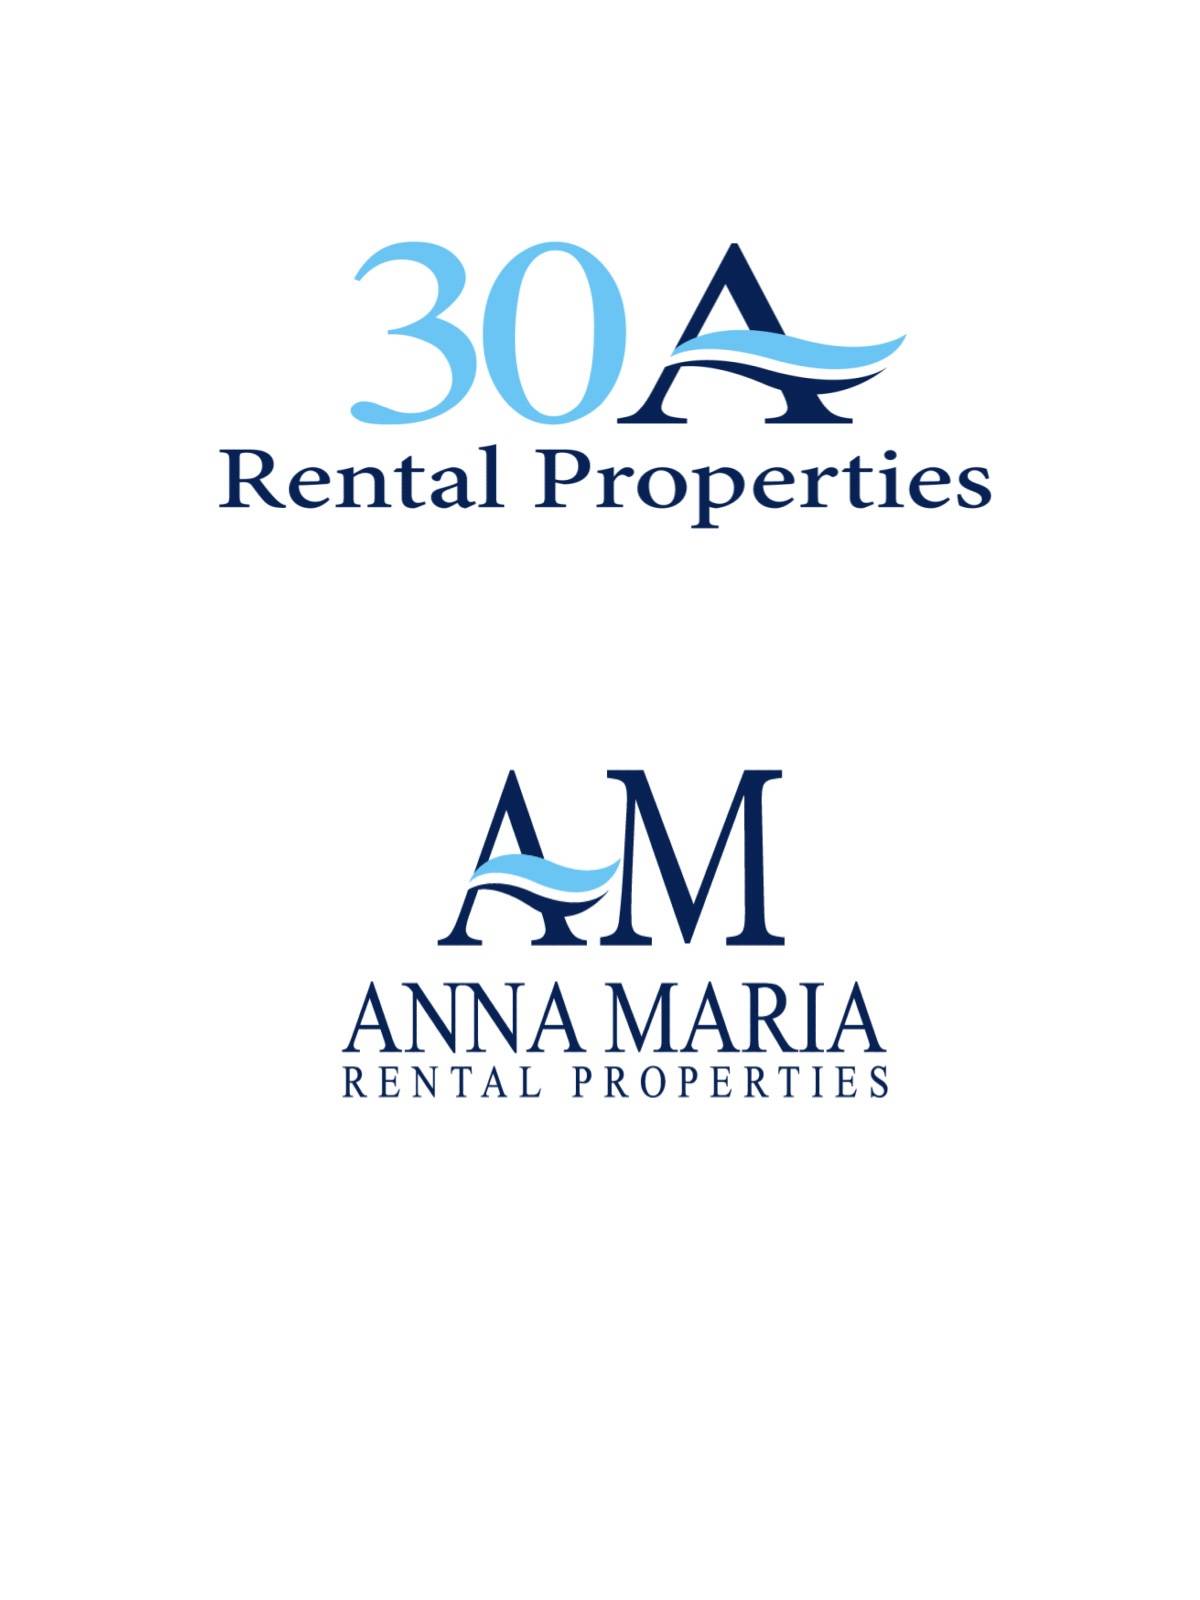 30A Rental Properties, LLC